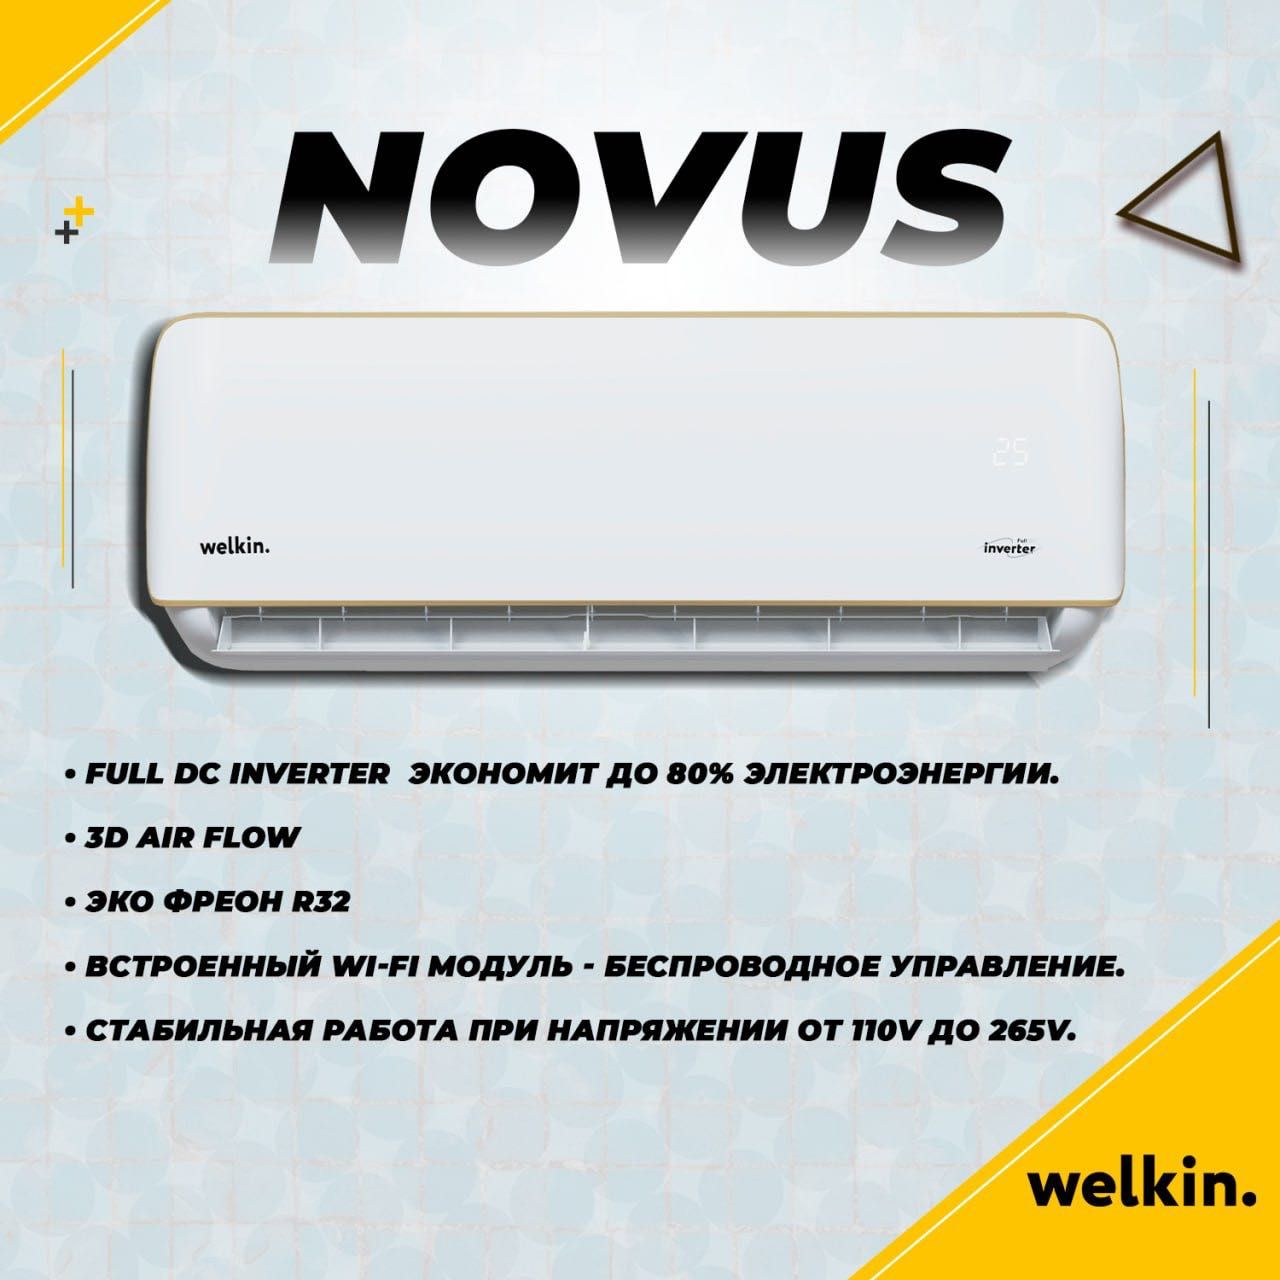 Кондиционер WELKIN Novus инвертер/ Welkin Novus inverter konditsioneri